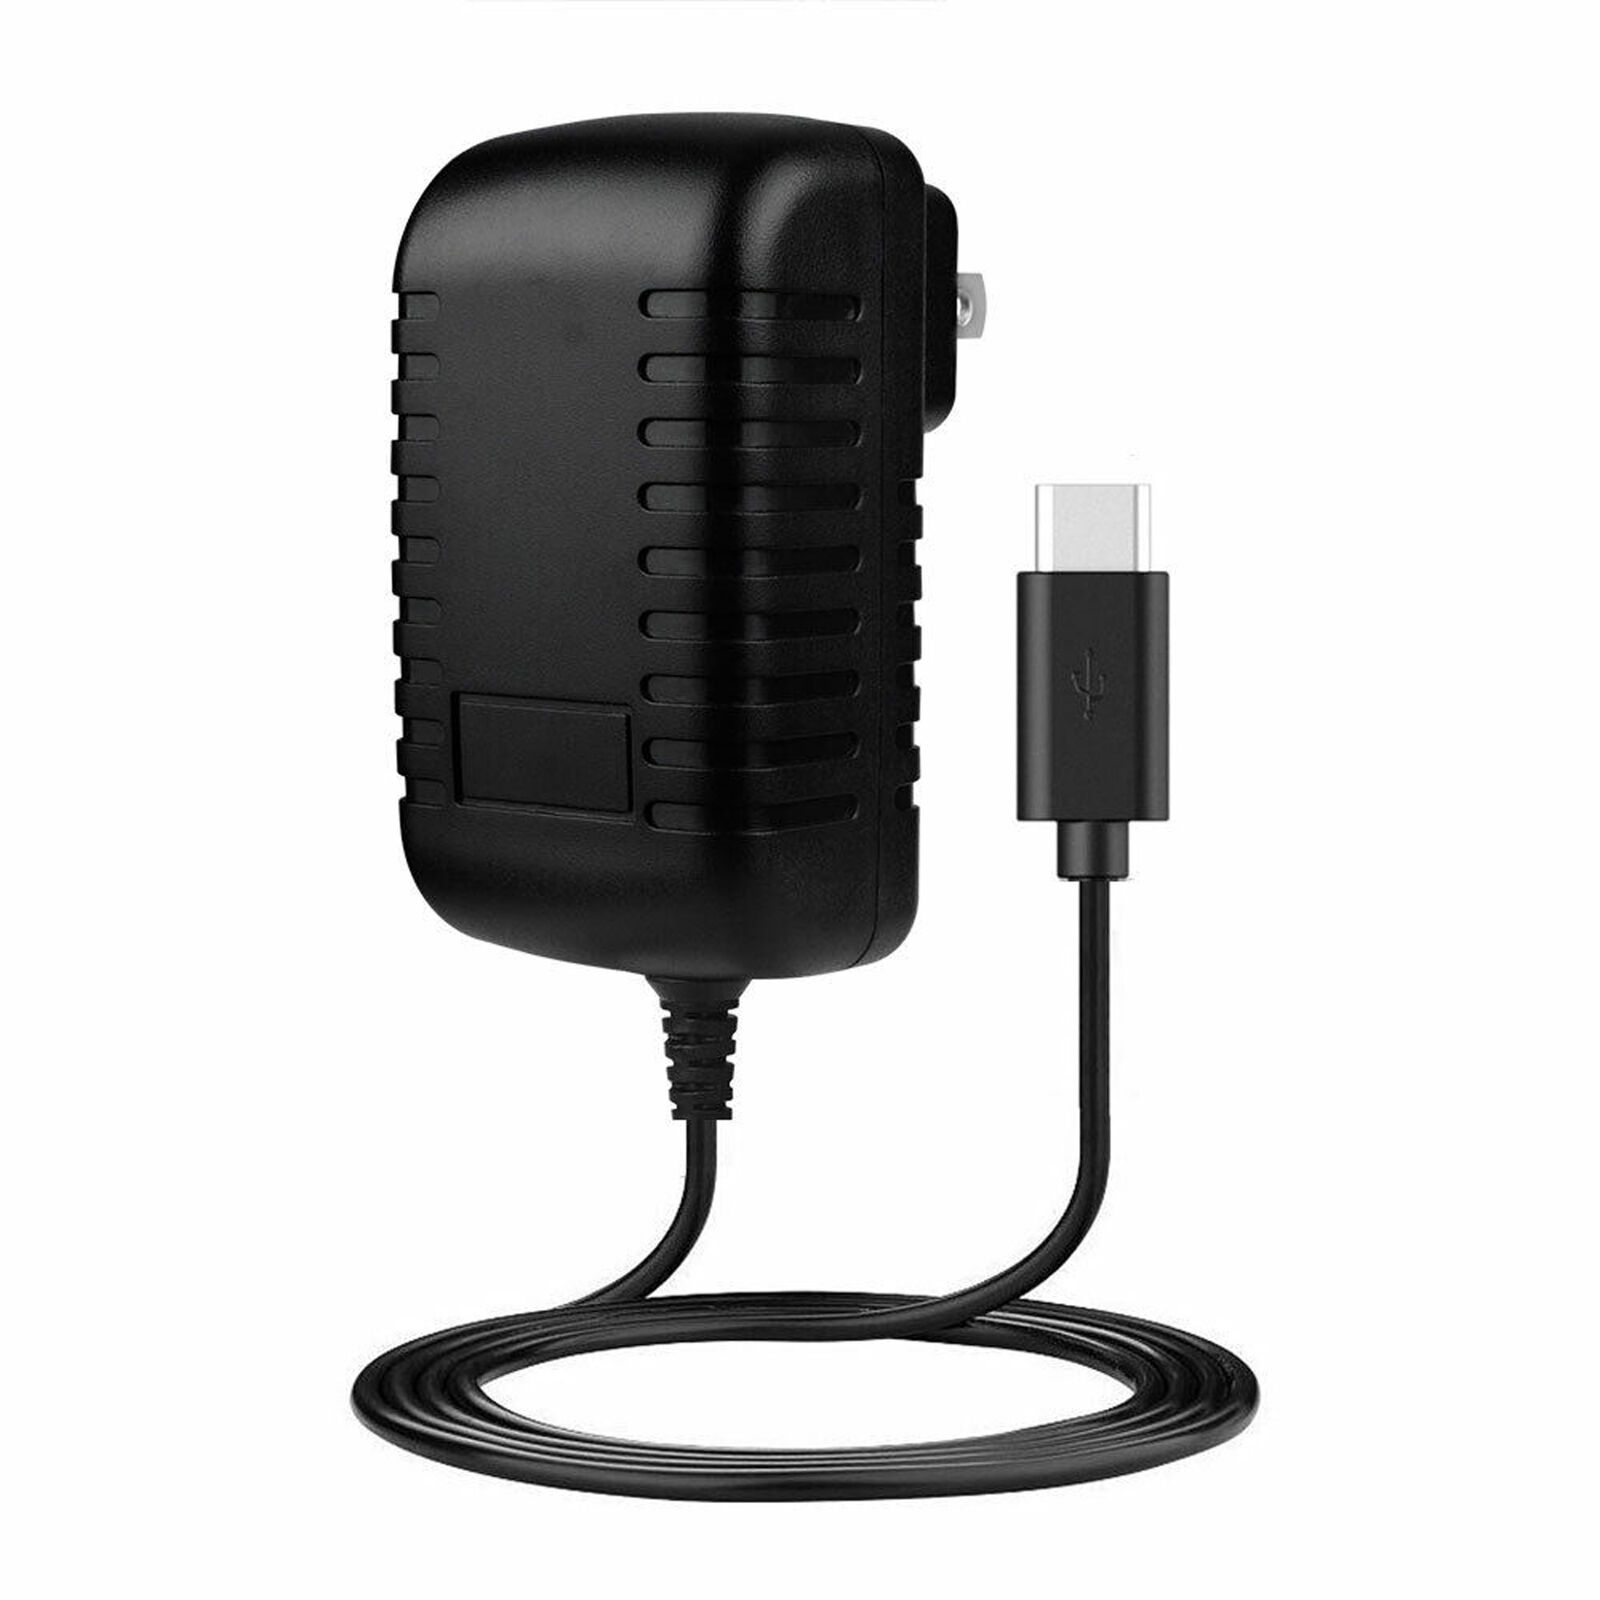 AC Adapter USB Charger For Pulseroll Ignite Mini PMG007 MG007 Heated Massage Gun US Adapter Mall Platinum Guarantee : (